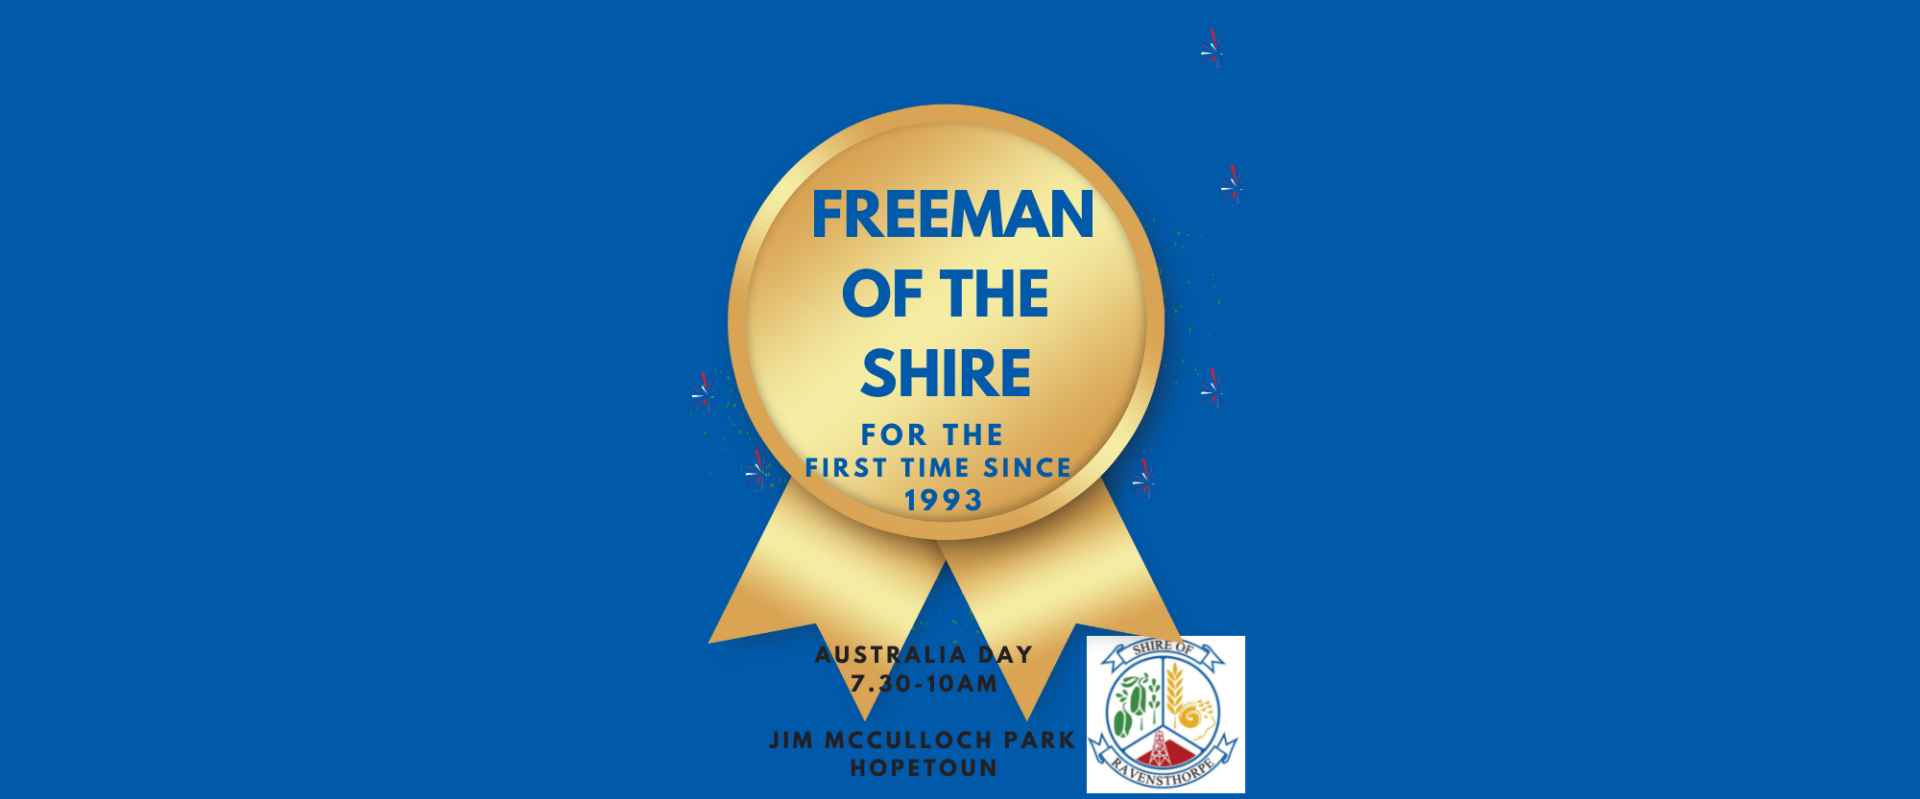 Freeman of the Shire presentations